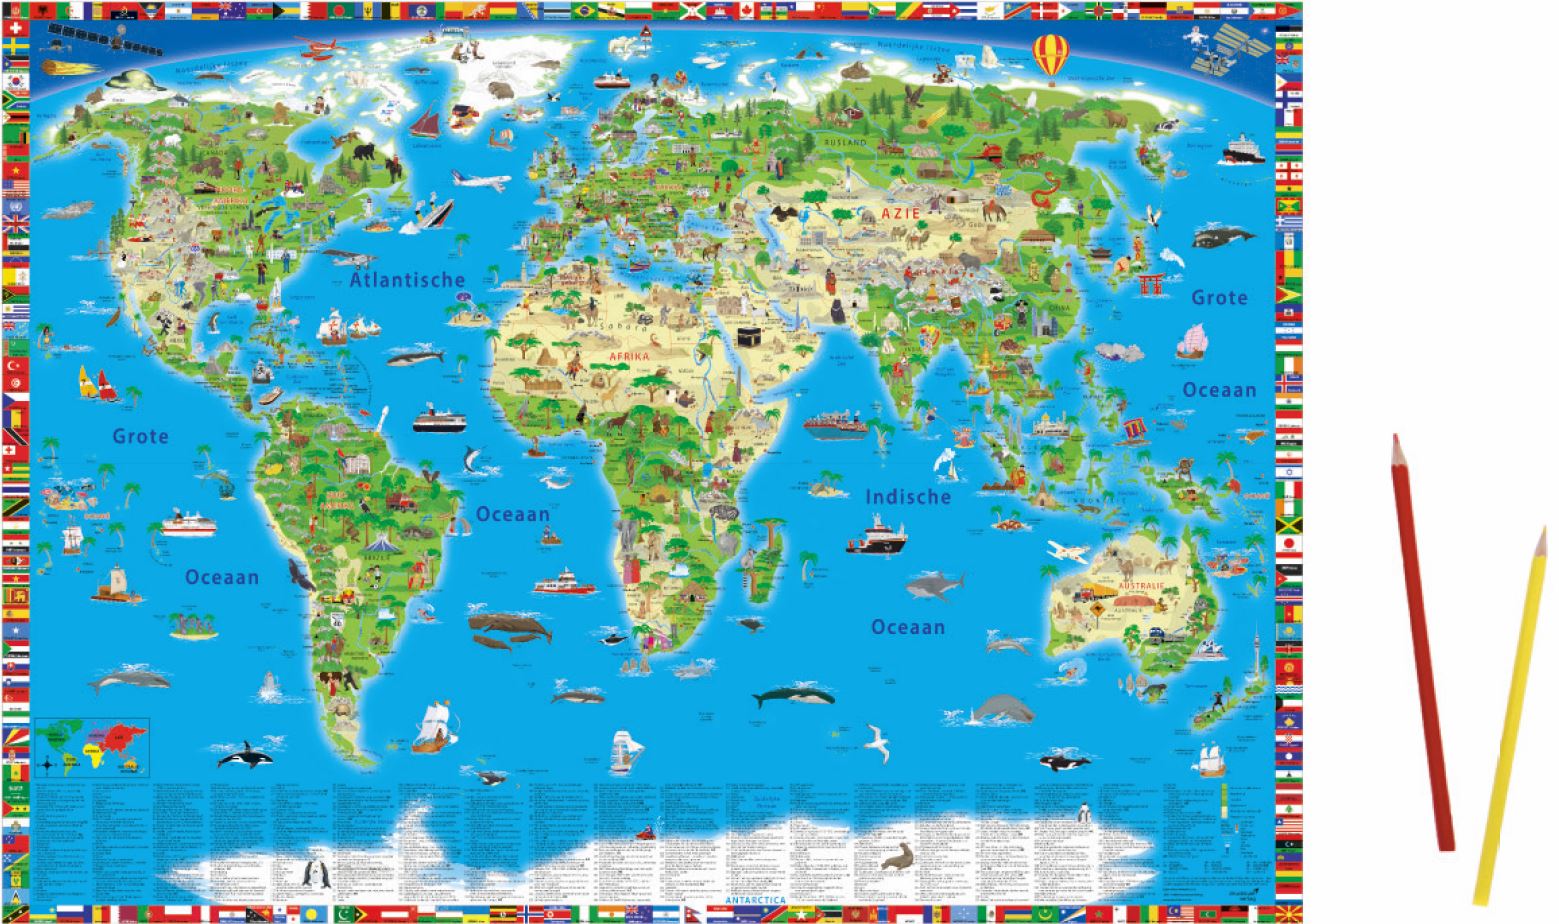 Muismat Geïllustreerde wereldkaart